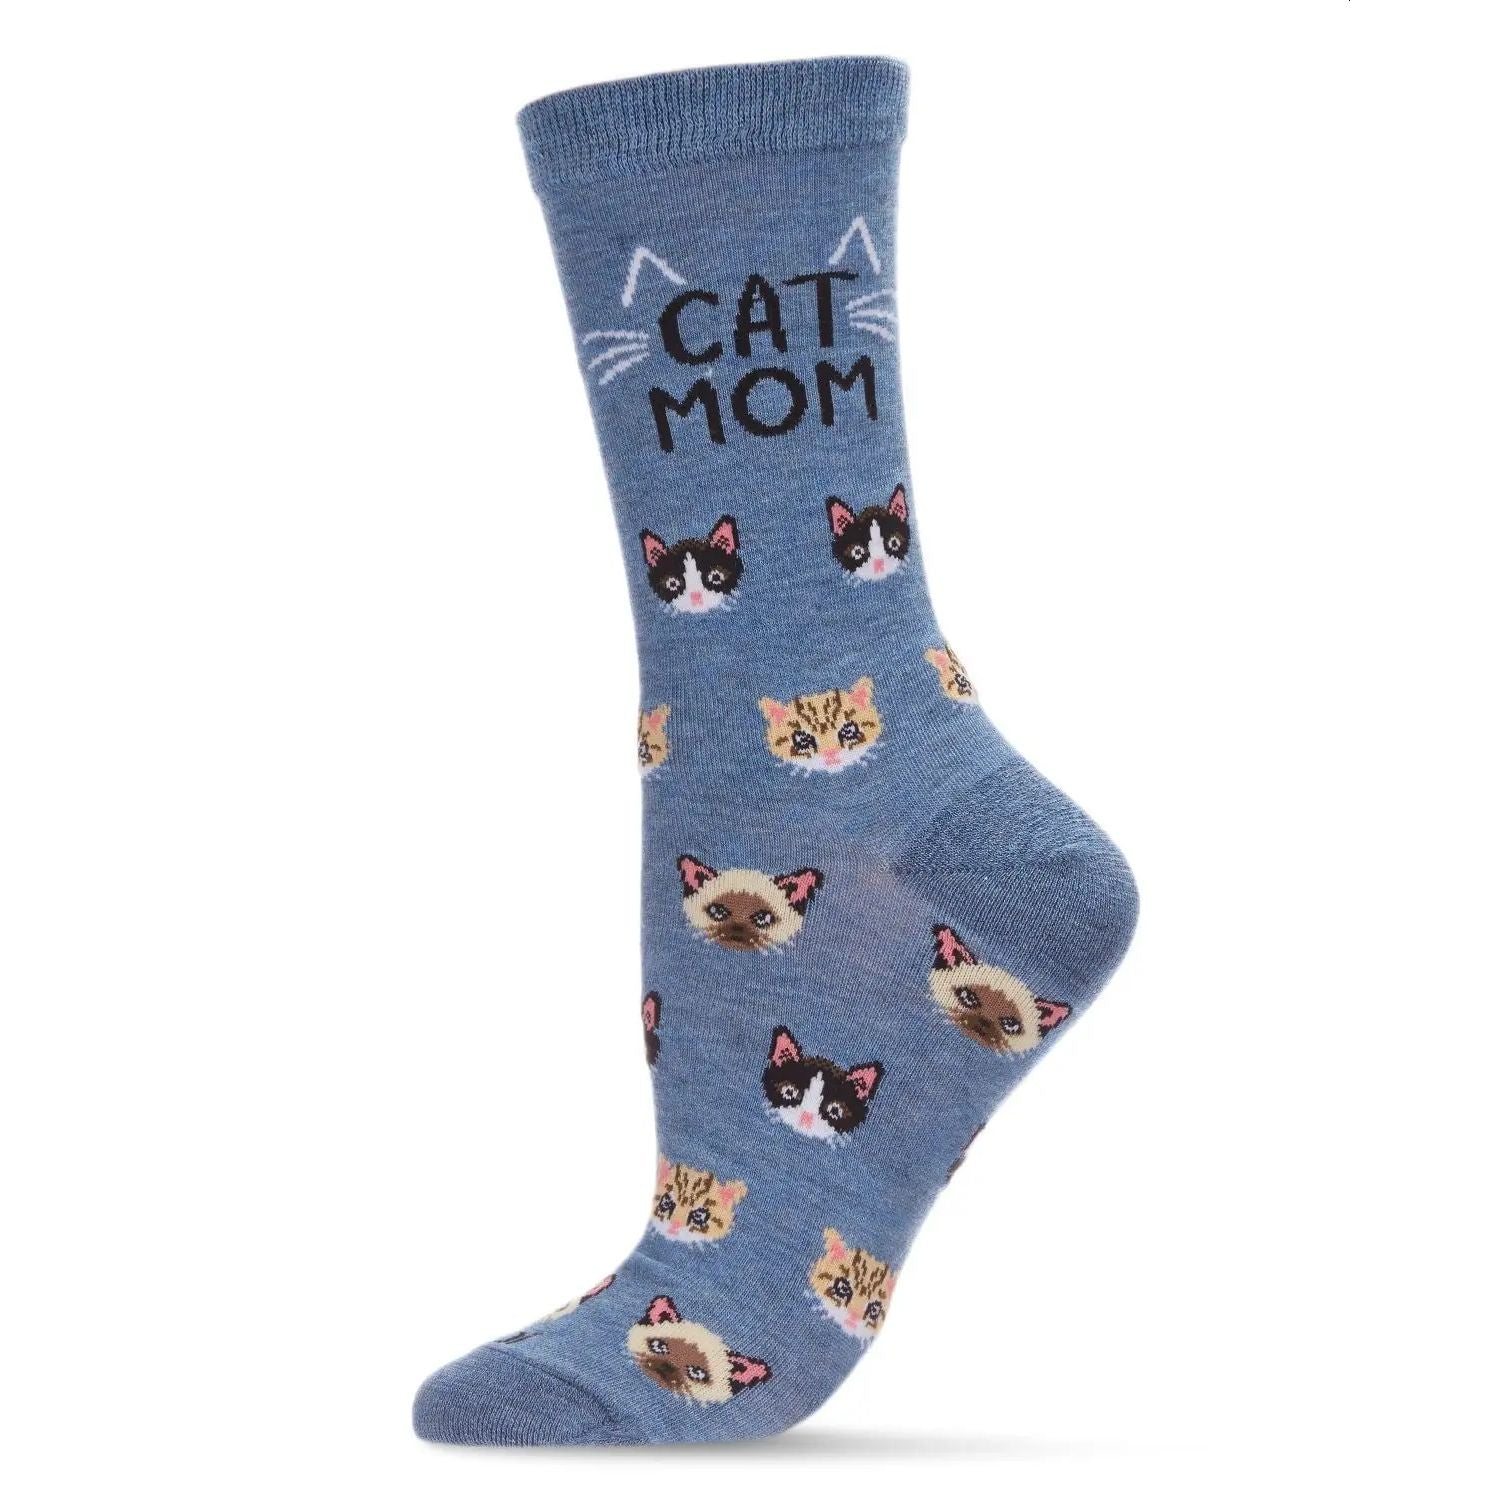 Cat Mom Socks